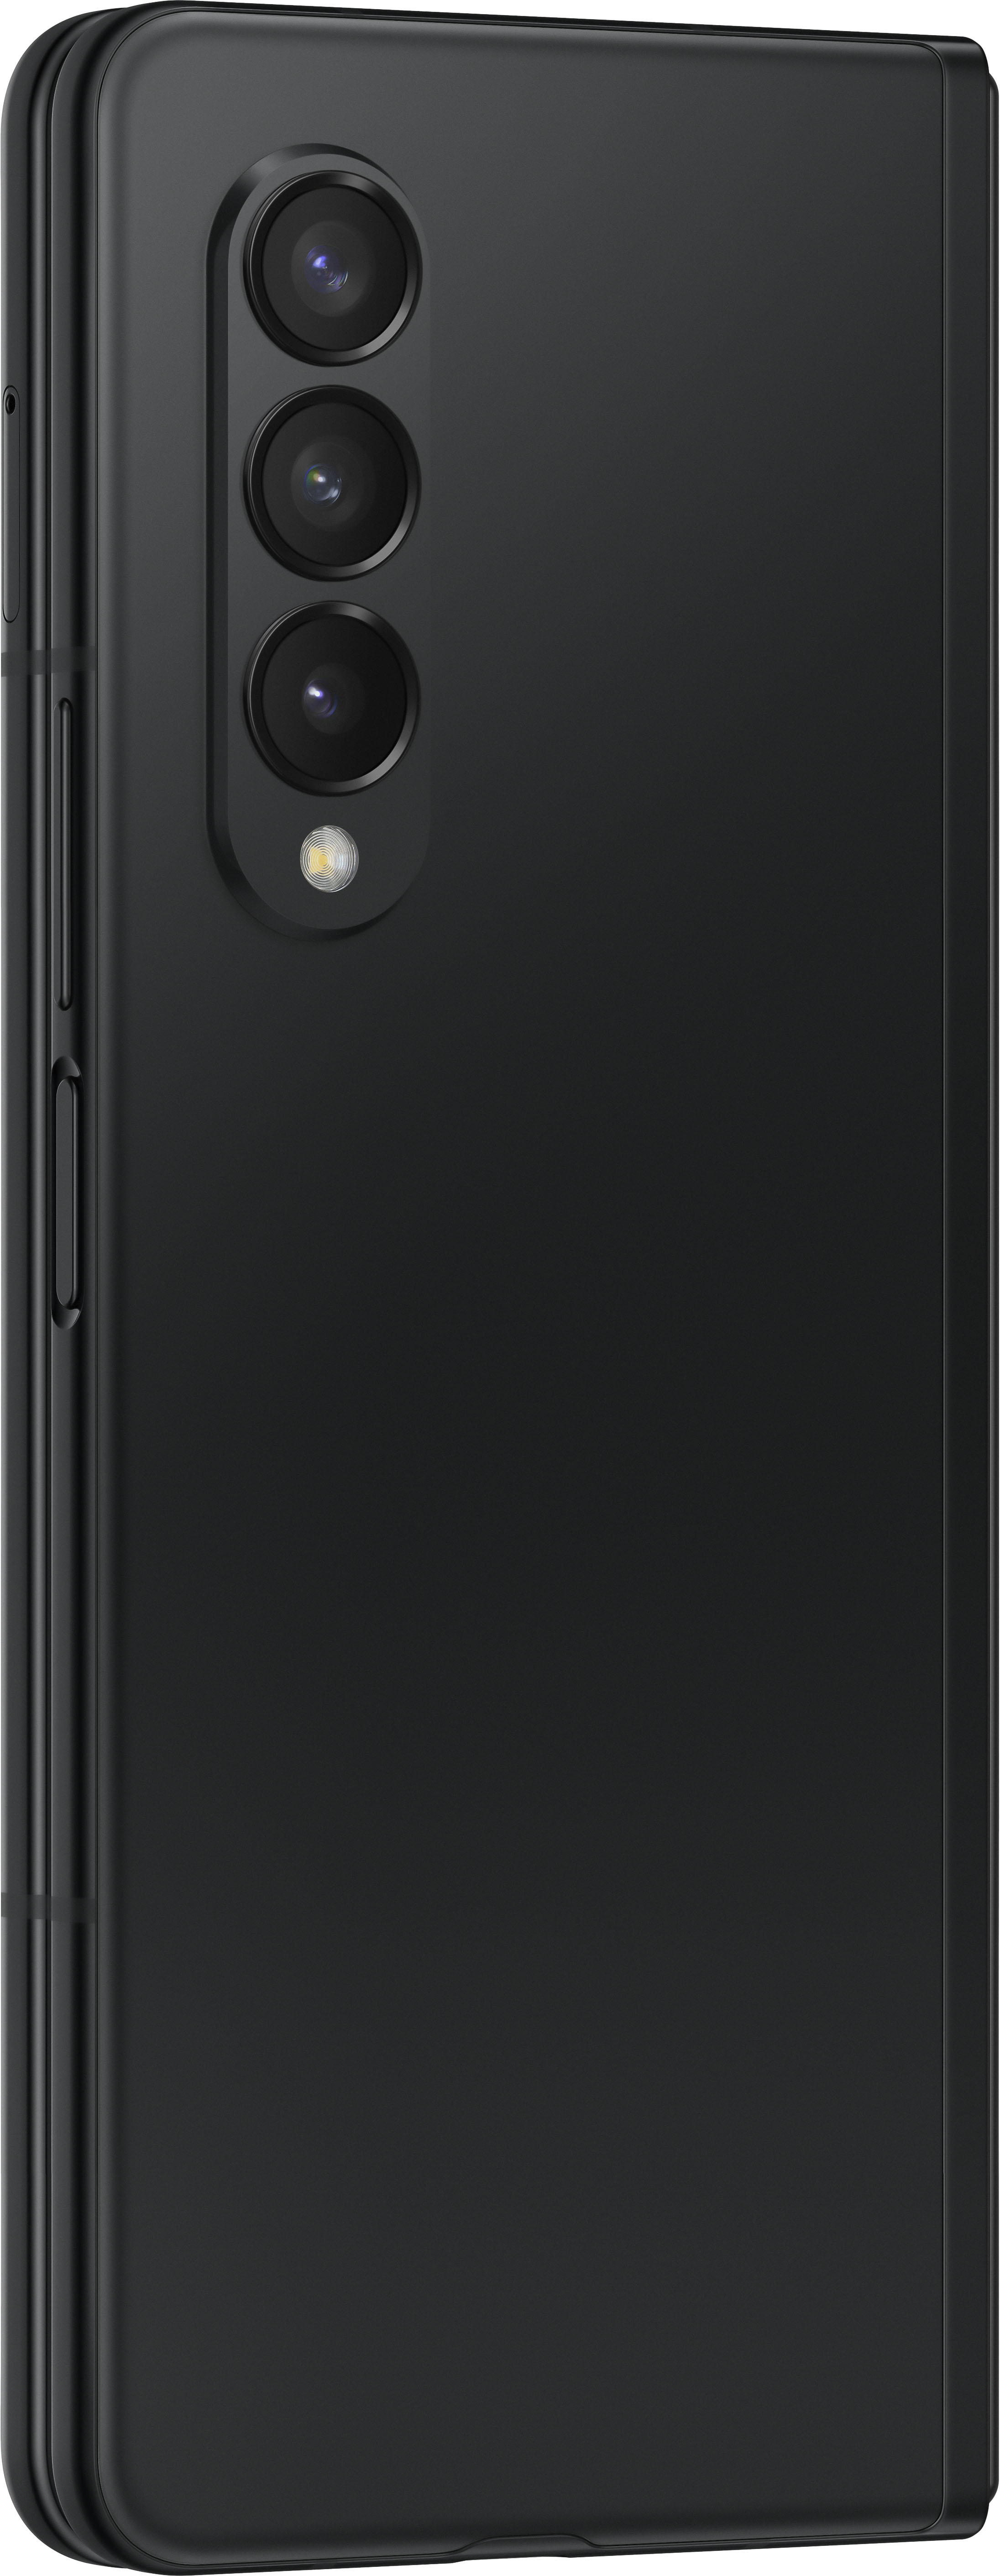  SAMSUNG Galaxy Z Fold 3 5G Cell Phone, Factory